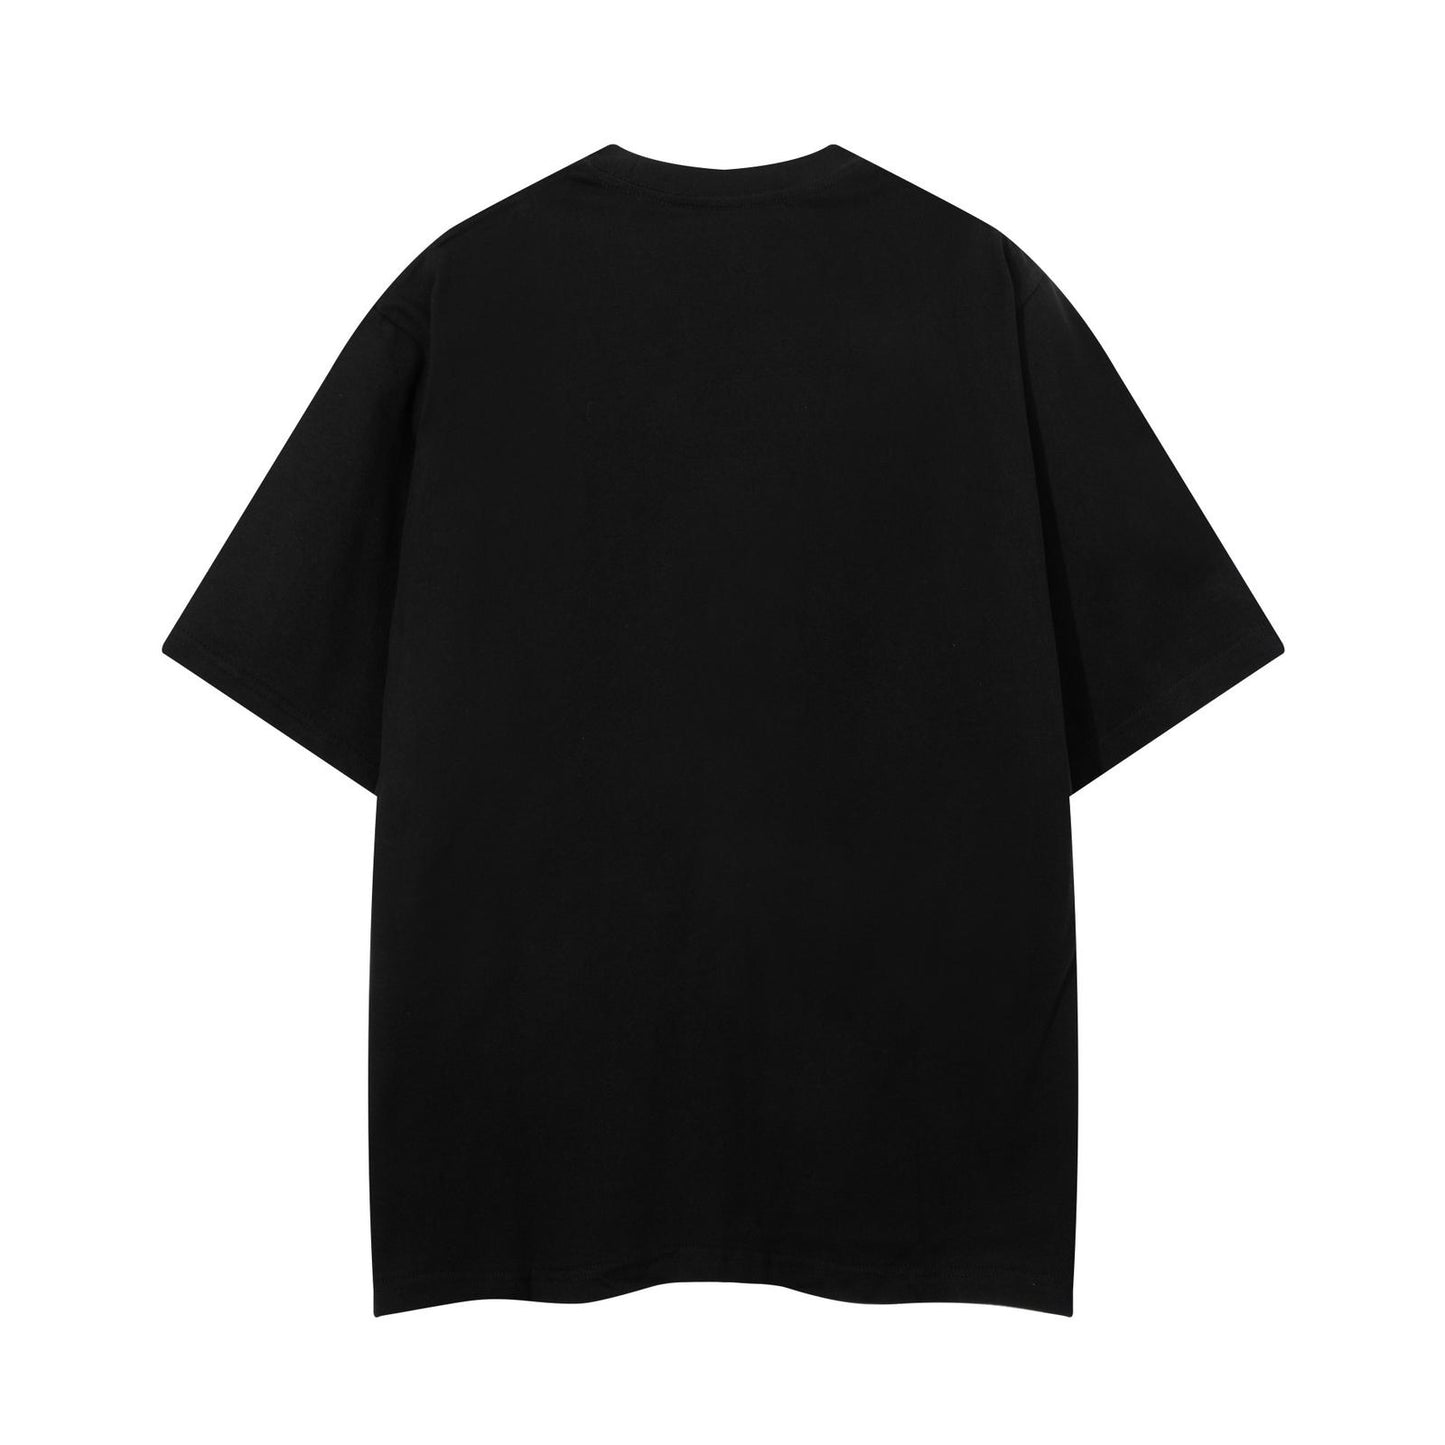 Balenciaga T-Shirt 49